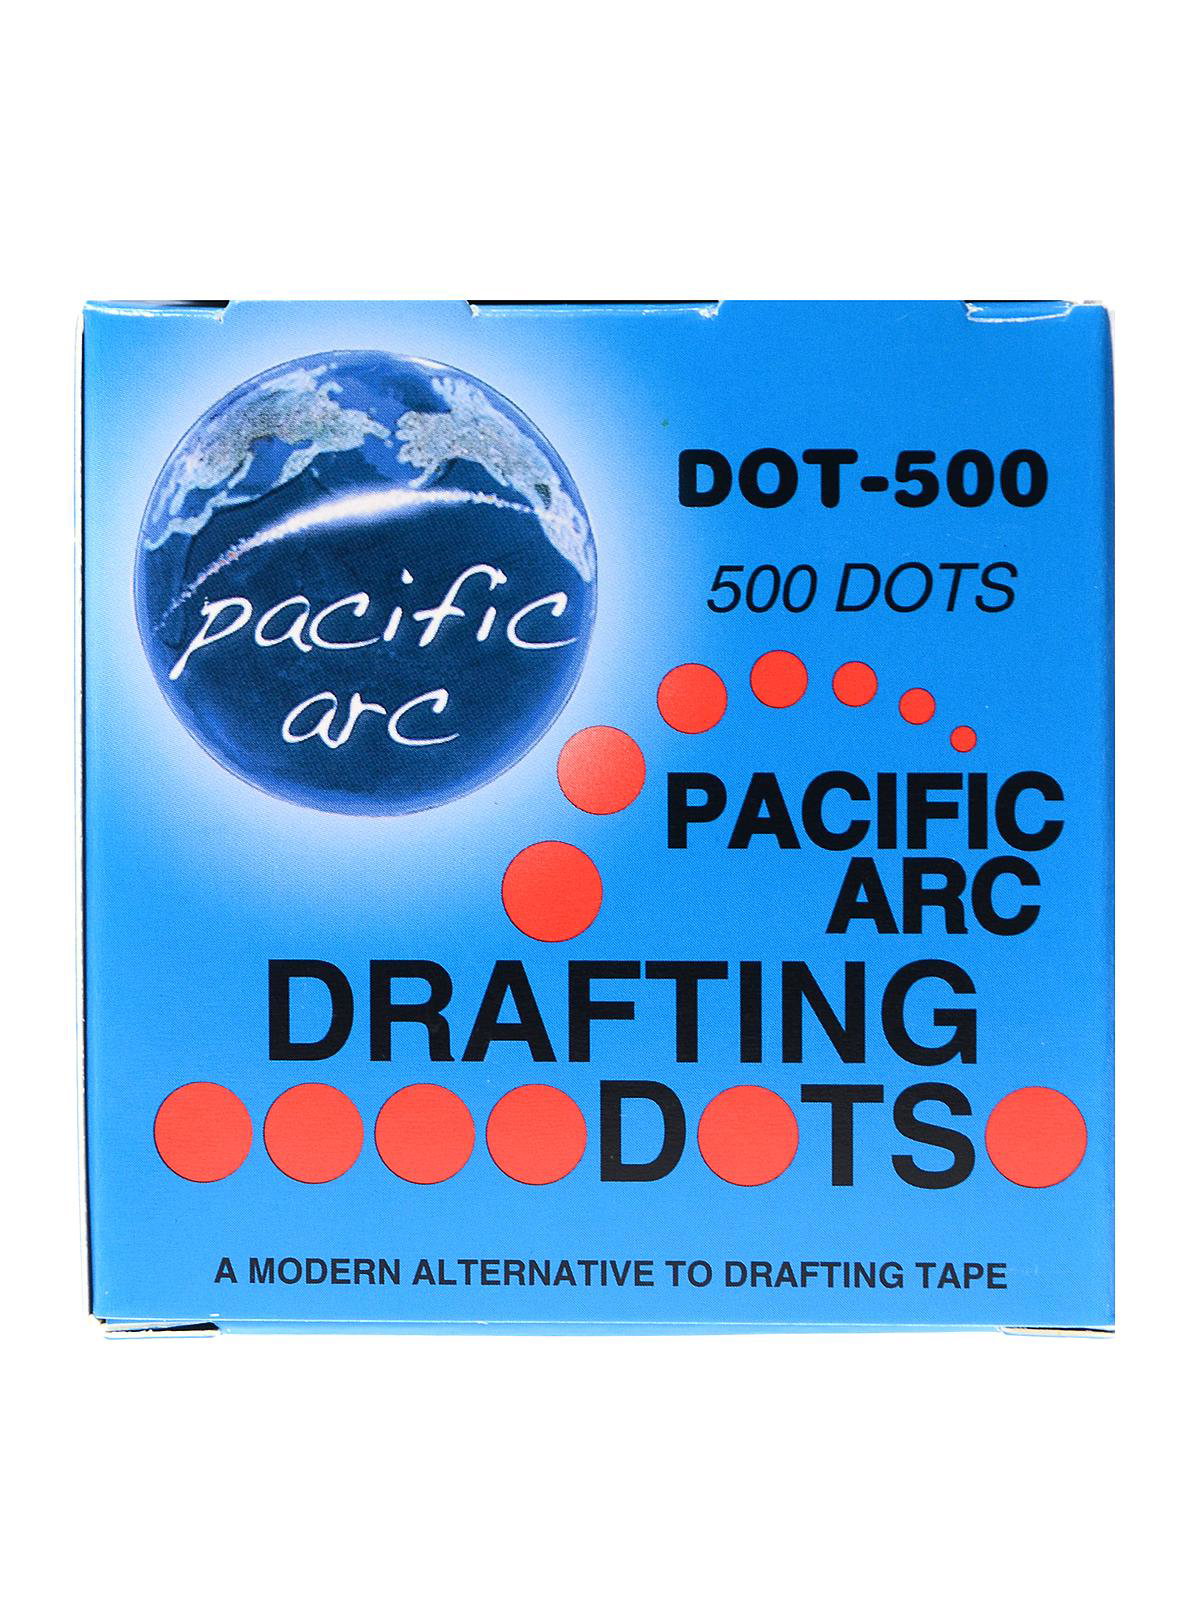 Drafting Dots 500 Roll